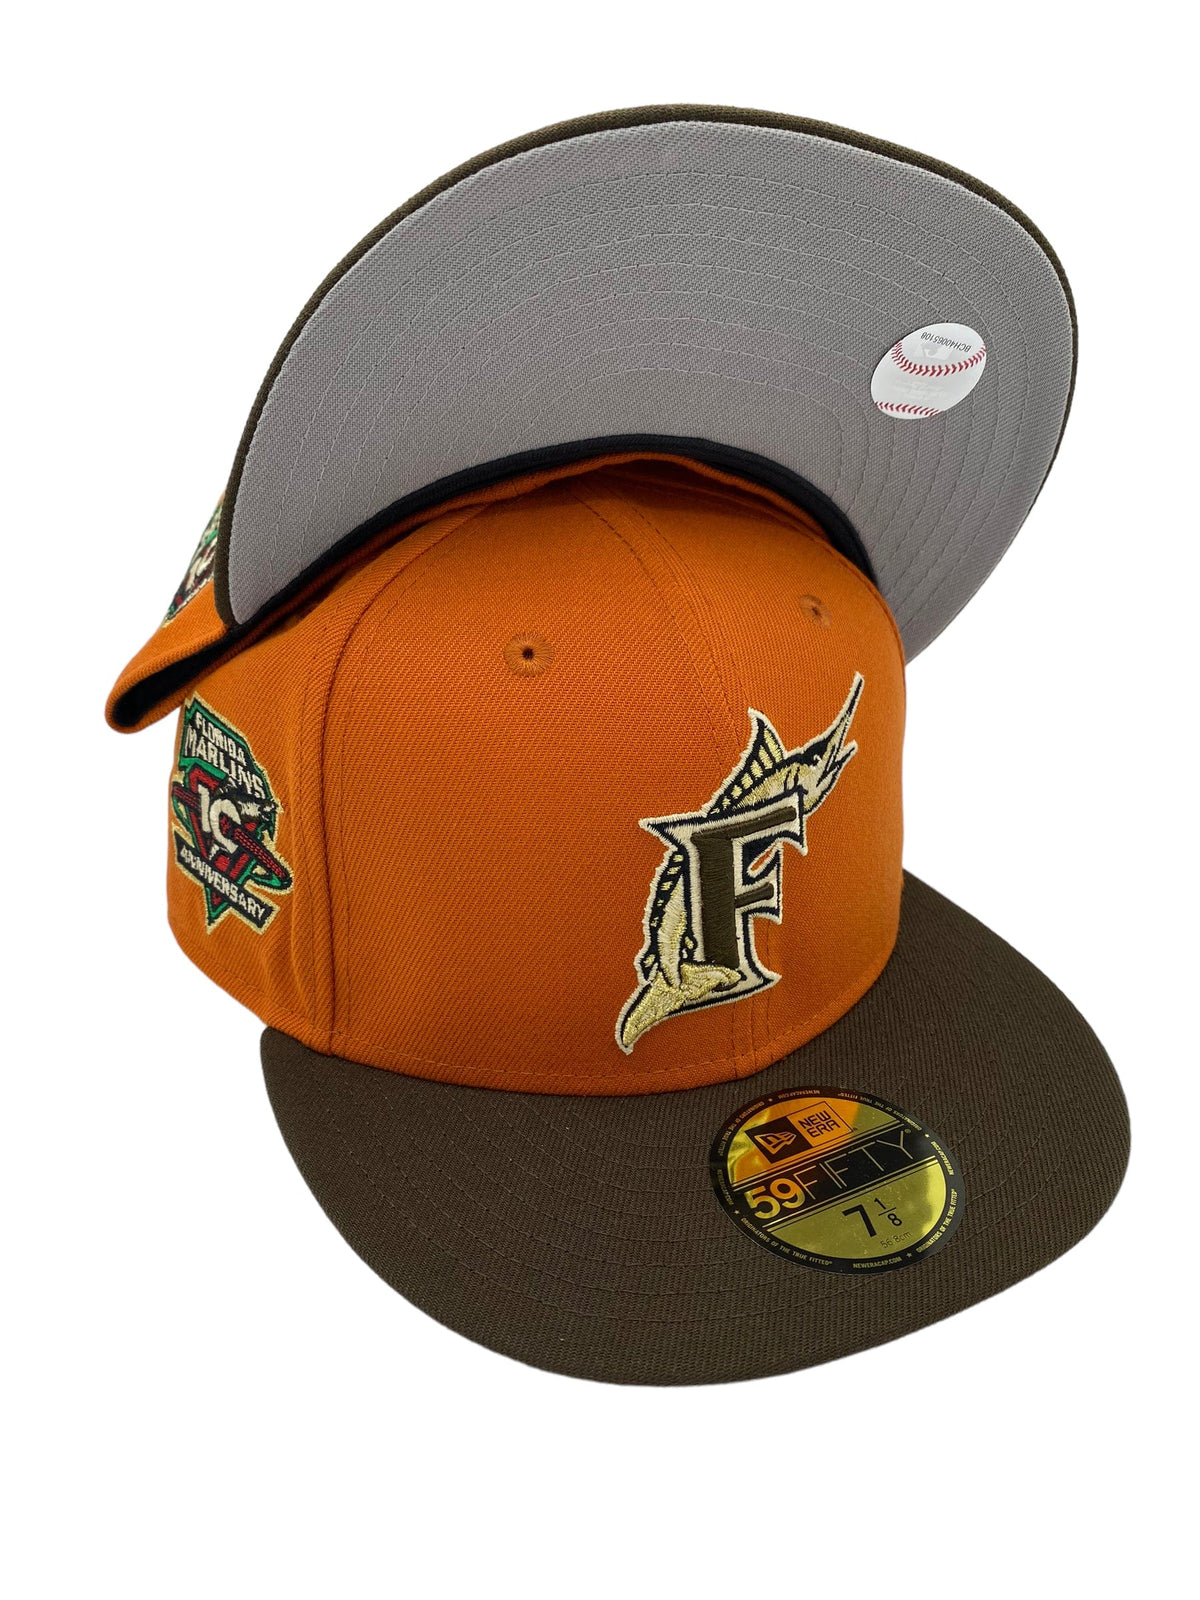 Las Vegas Raiders New Era City Icon 59FIFTY Fitted Hat - Cream/Burnt Orange